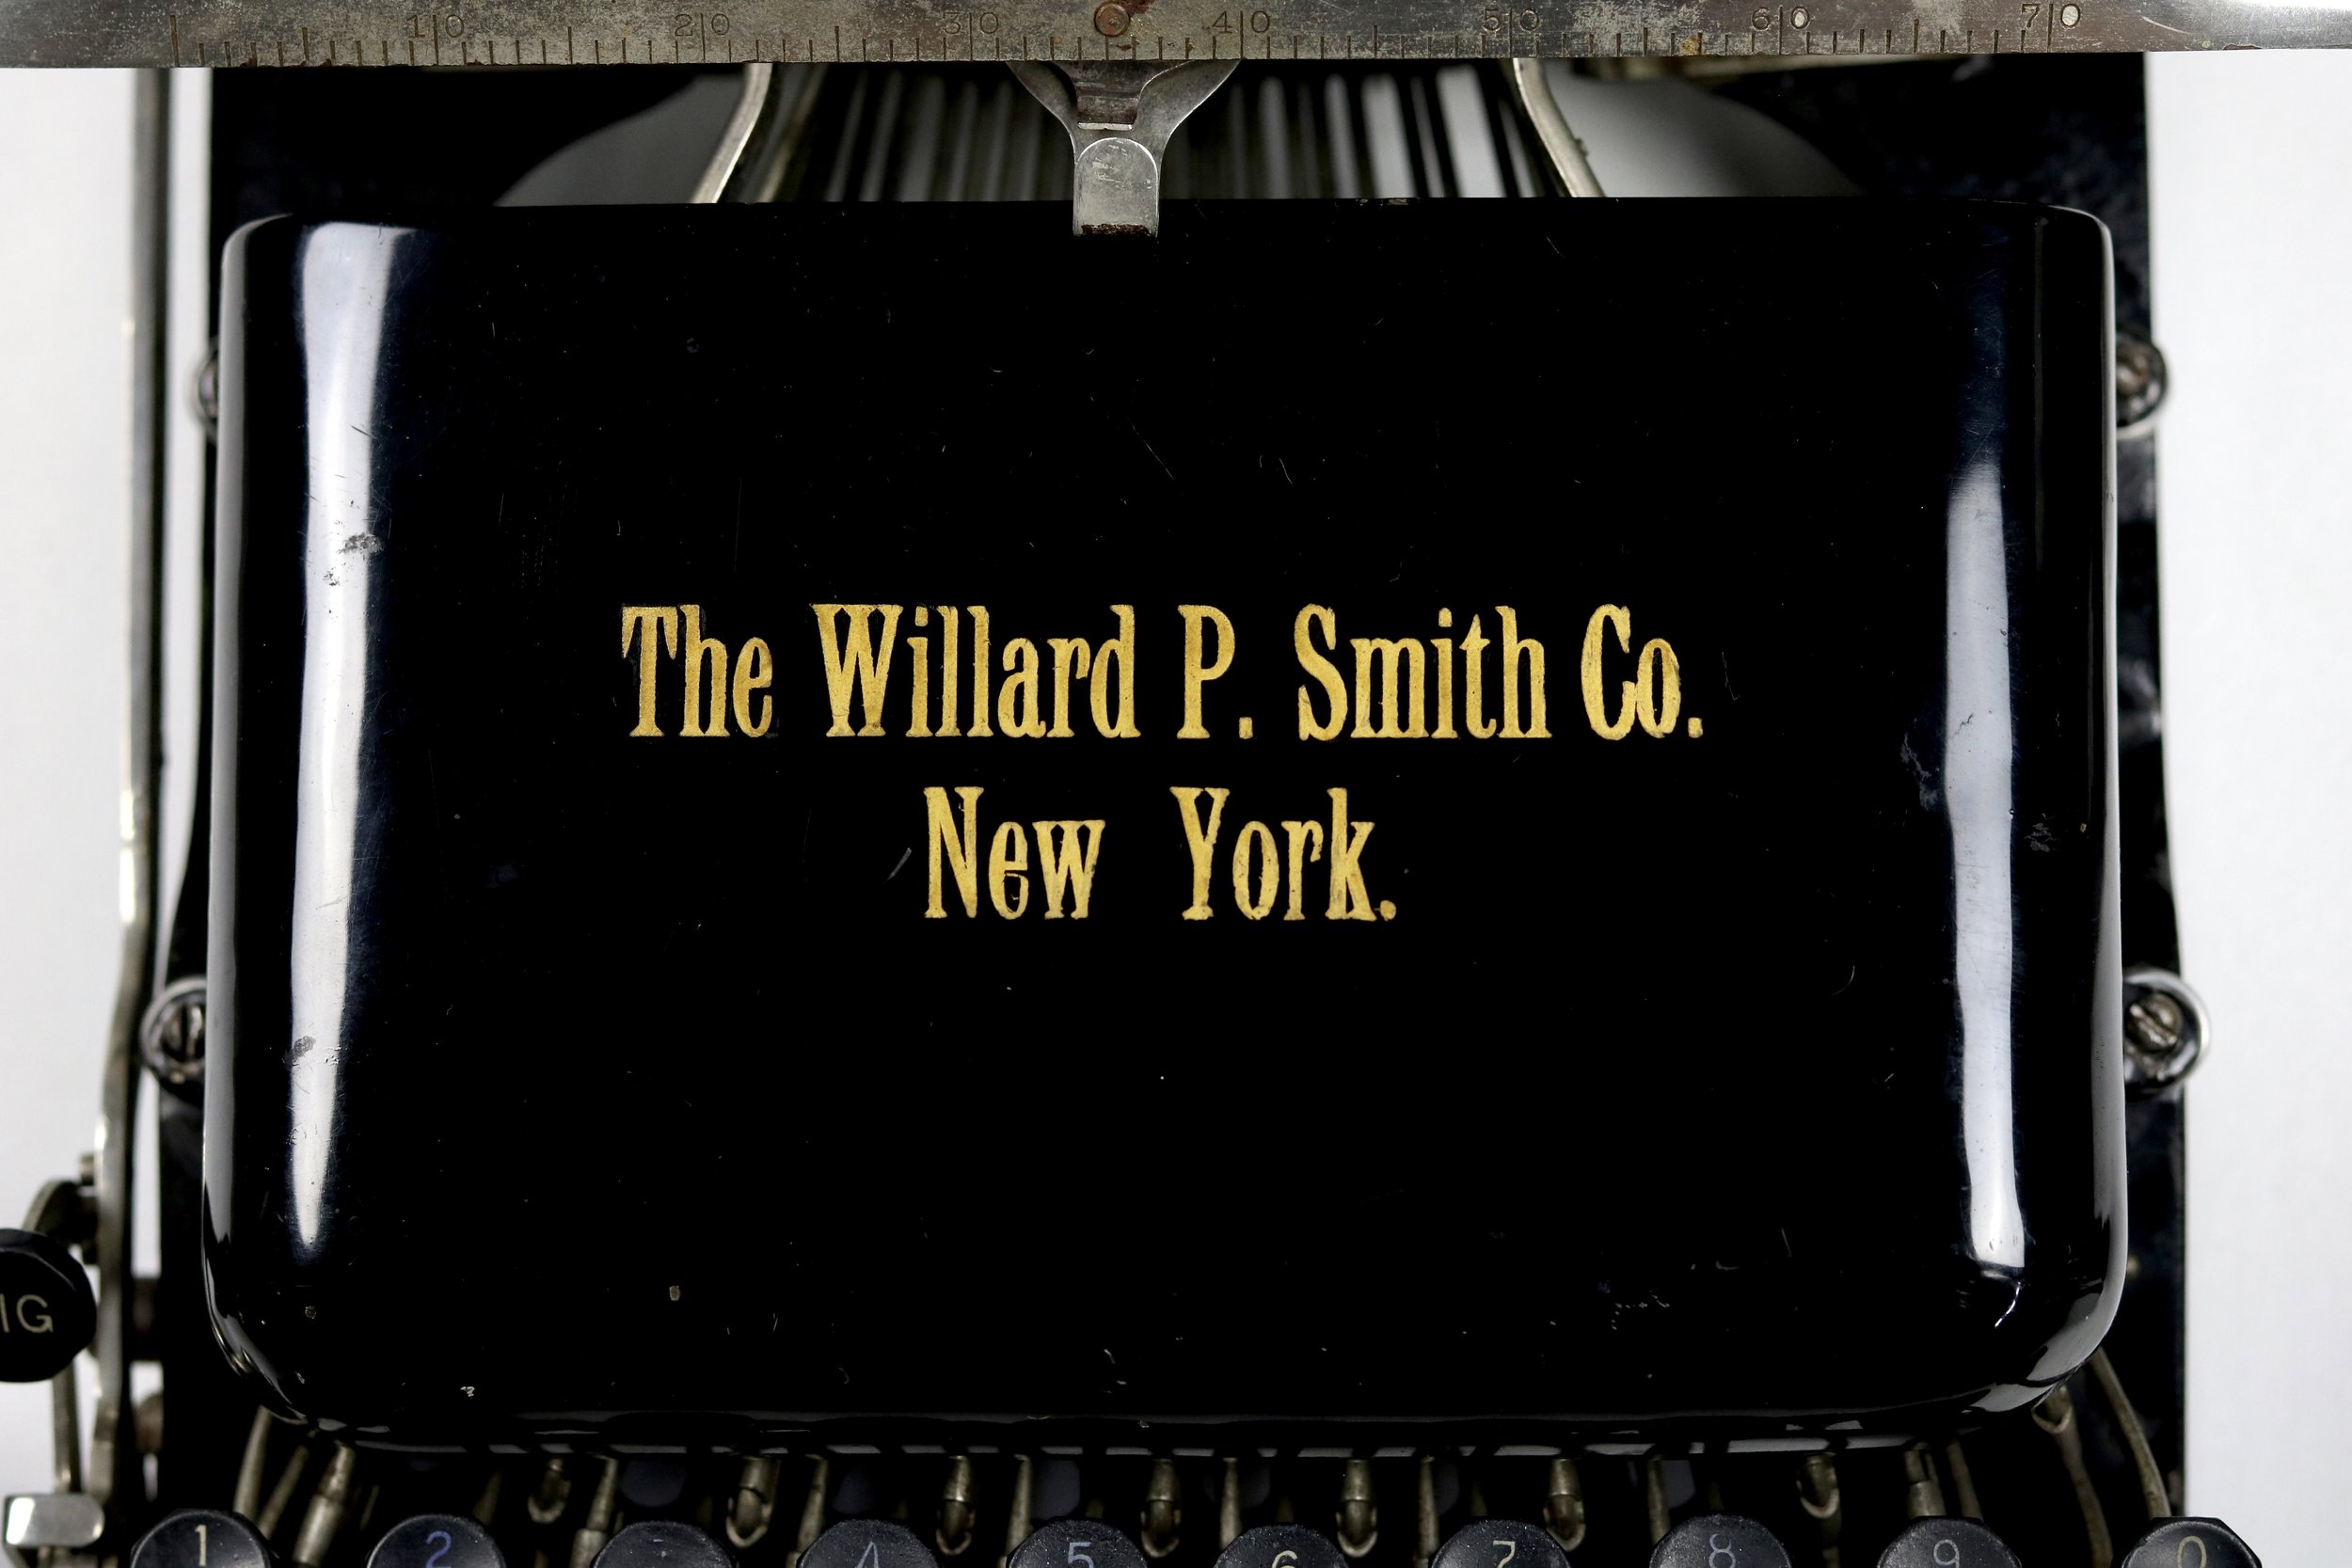 The Willard P. Smith Co. New York Model No.8 - The American Typewriter Co. 265 Broadway, new York